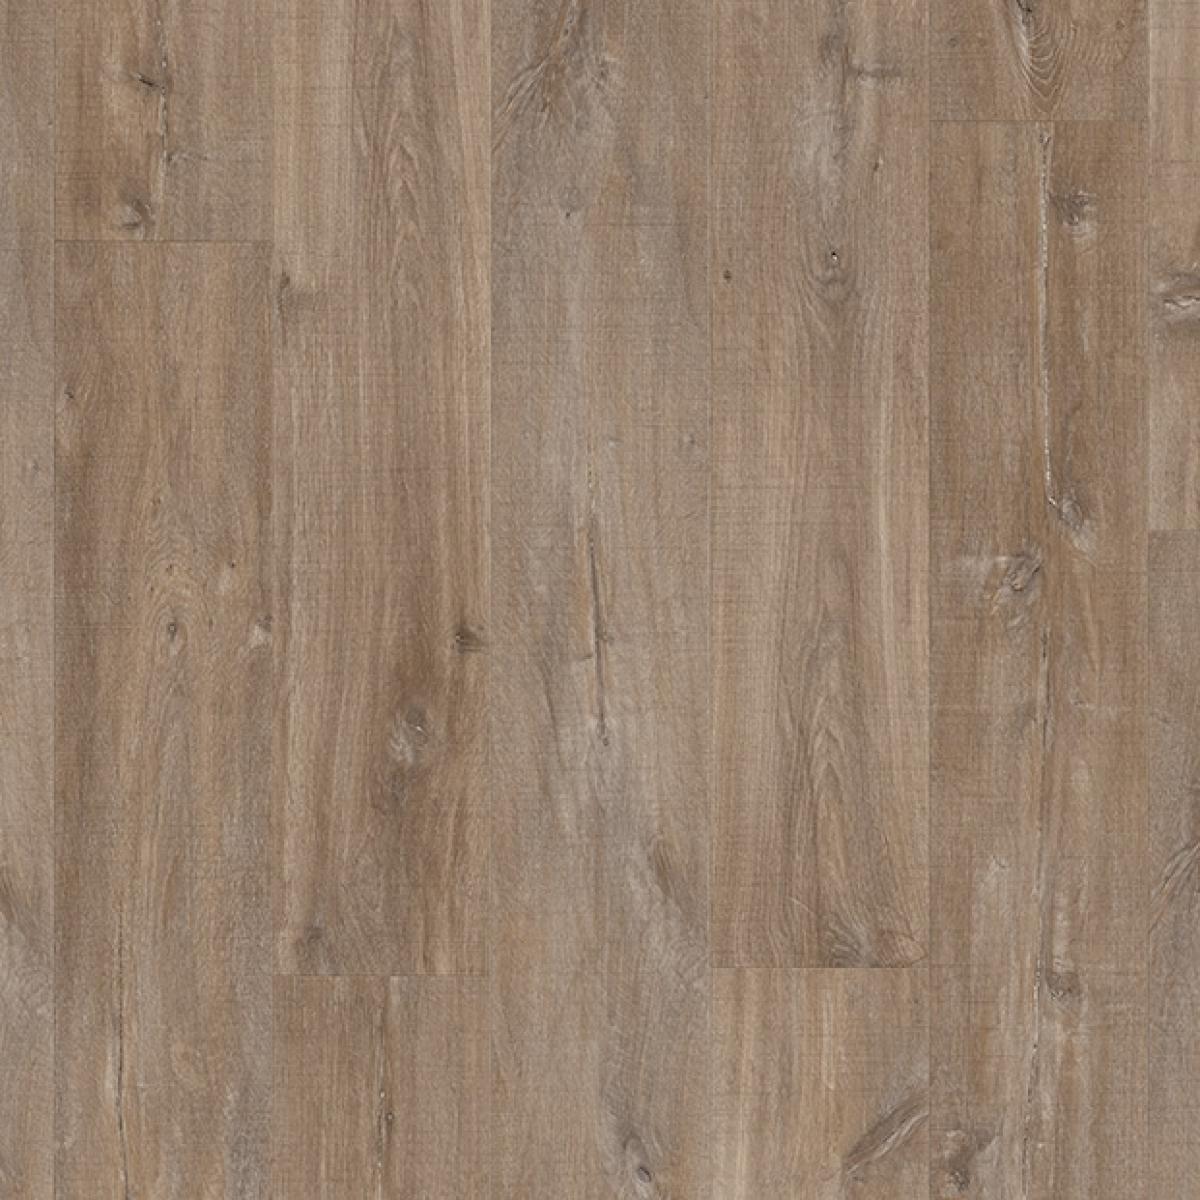 Canyon Oak Dark Brown With Saw Cuts, Dark Brown Vinyl Floor Tiles